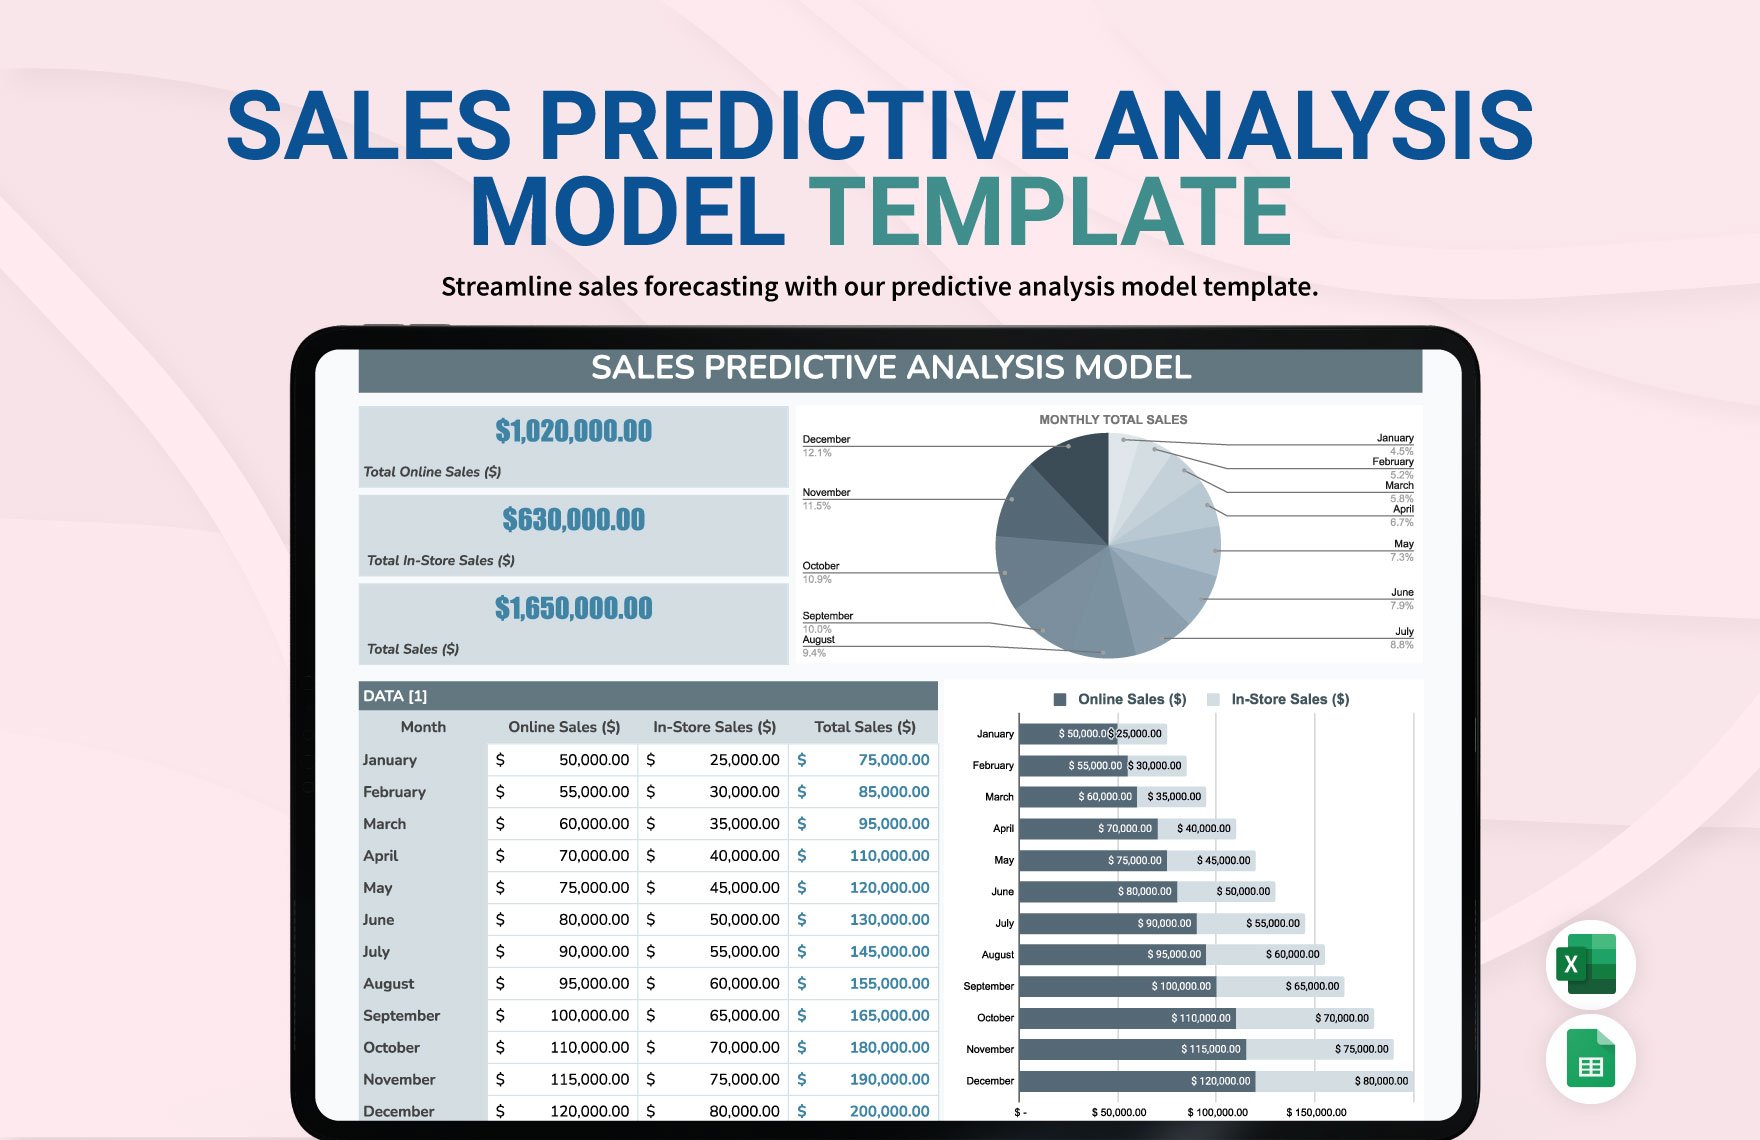 Sales Predictive Analysis Model Template